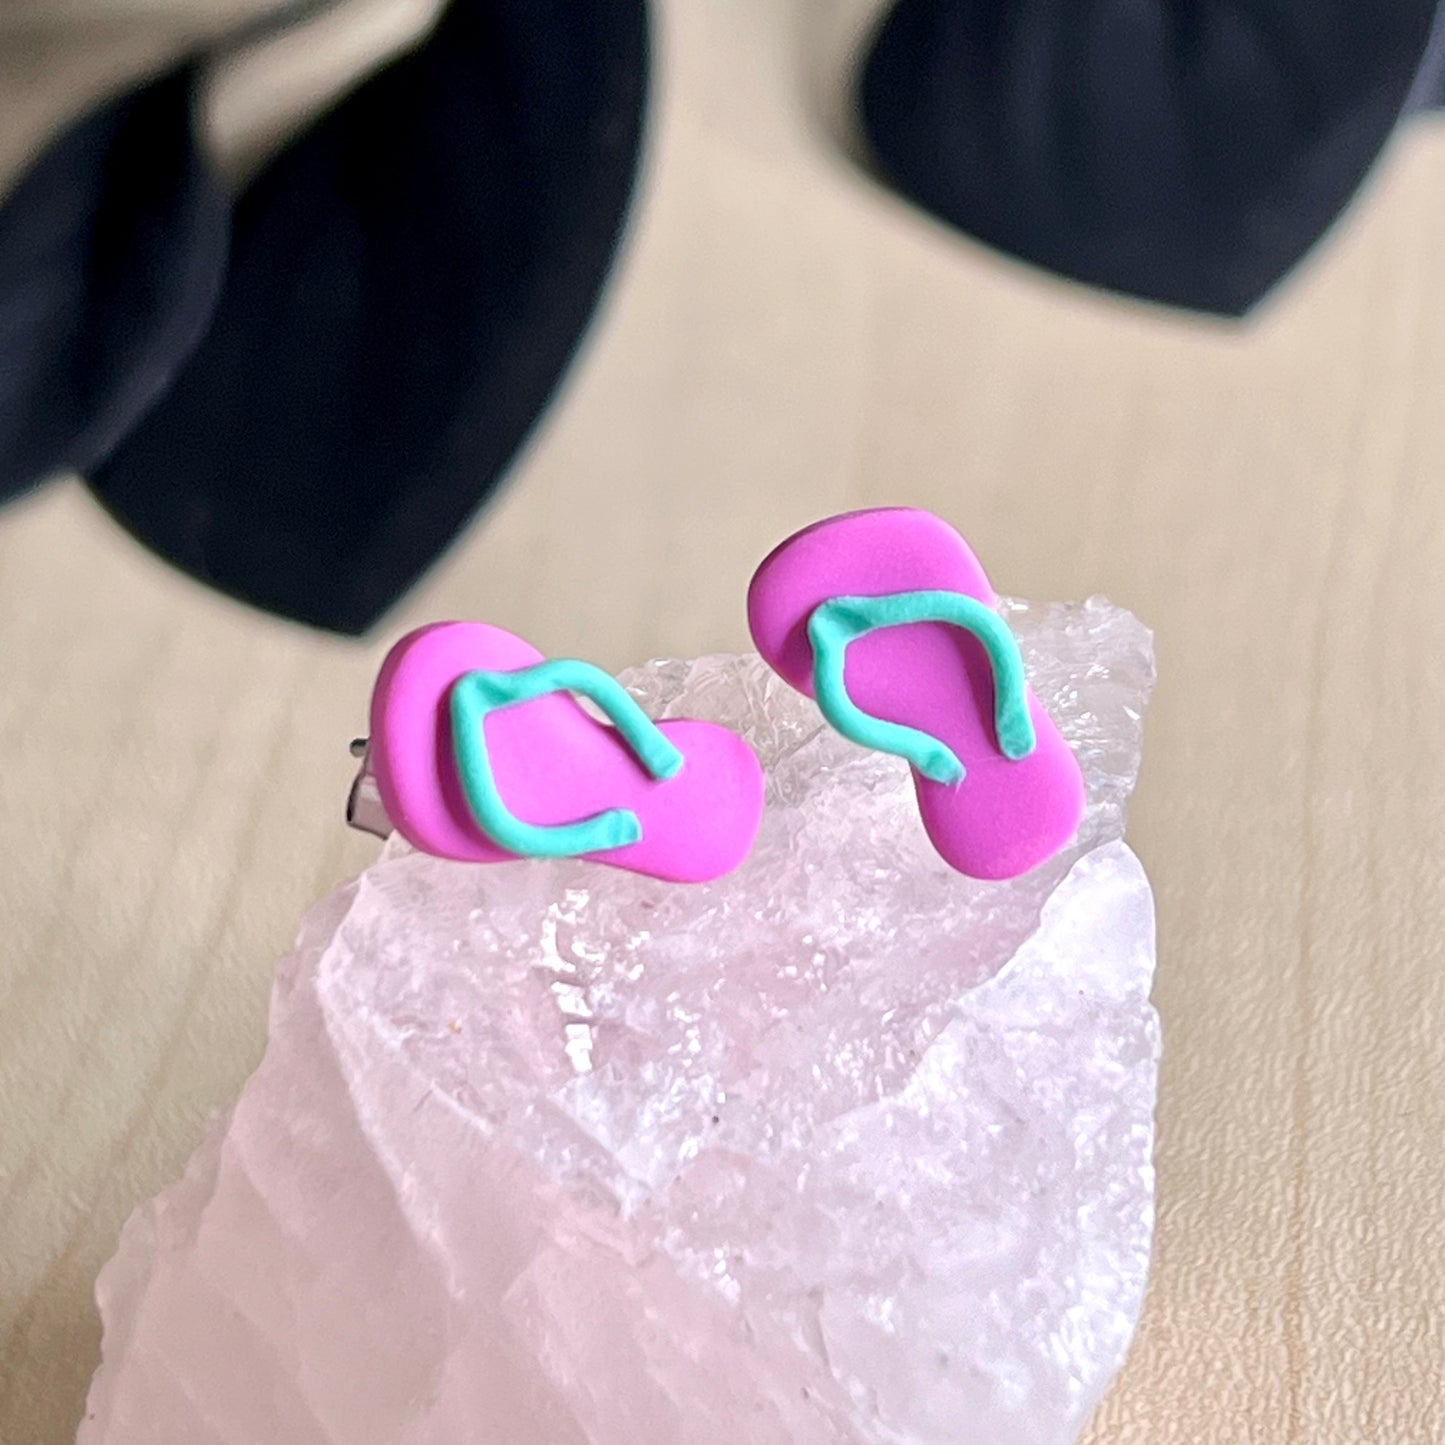 Thongs / flip flops studs, pink with Fiji blue, handmade earrings